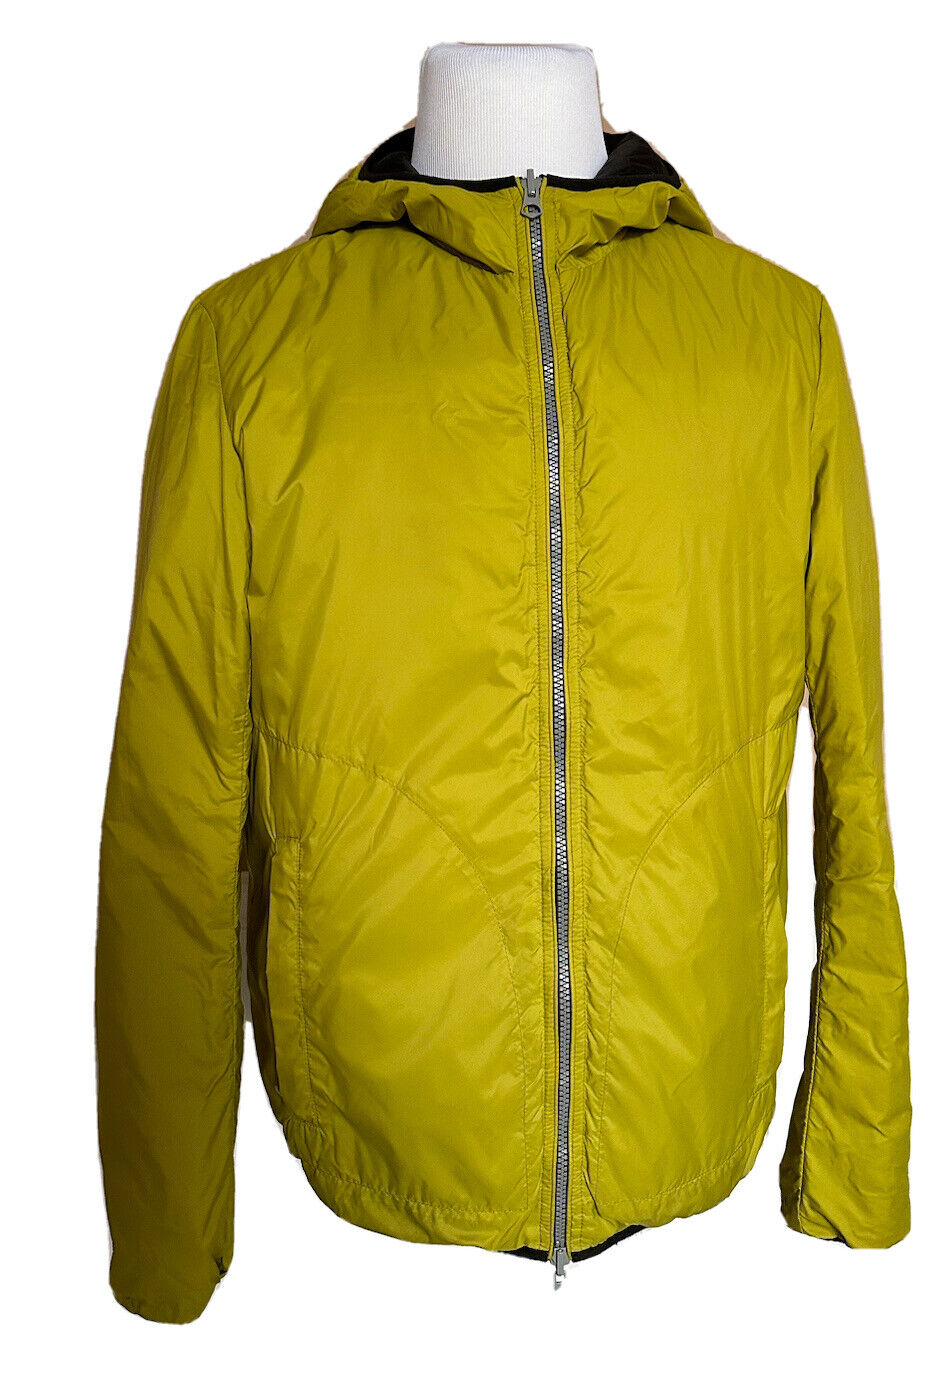 Armani Jeans Двусторонняя серо-желтая двусторонняя куртка-пуховик с капюшоном, большая (52) 